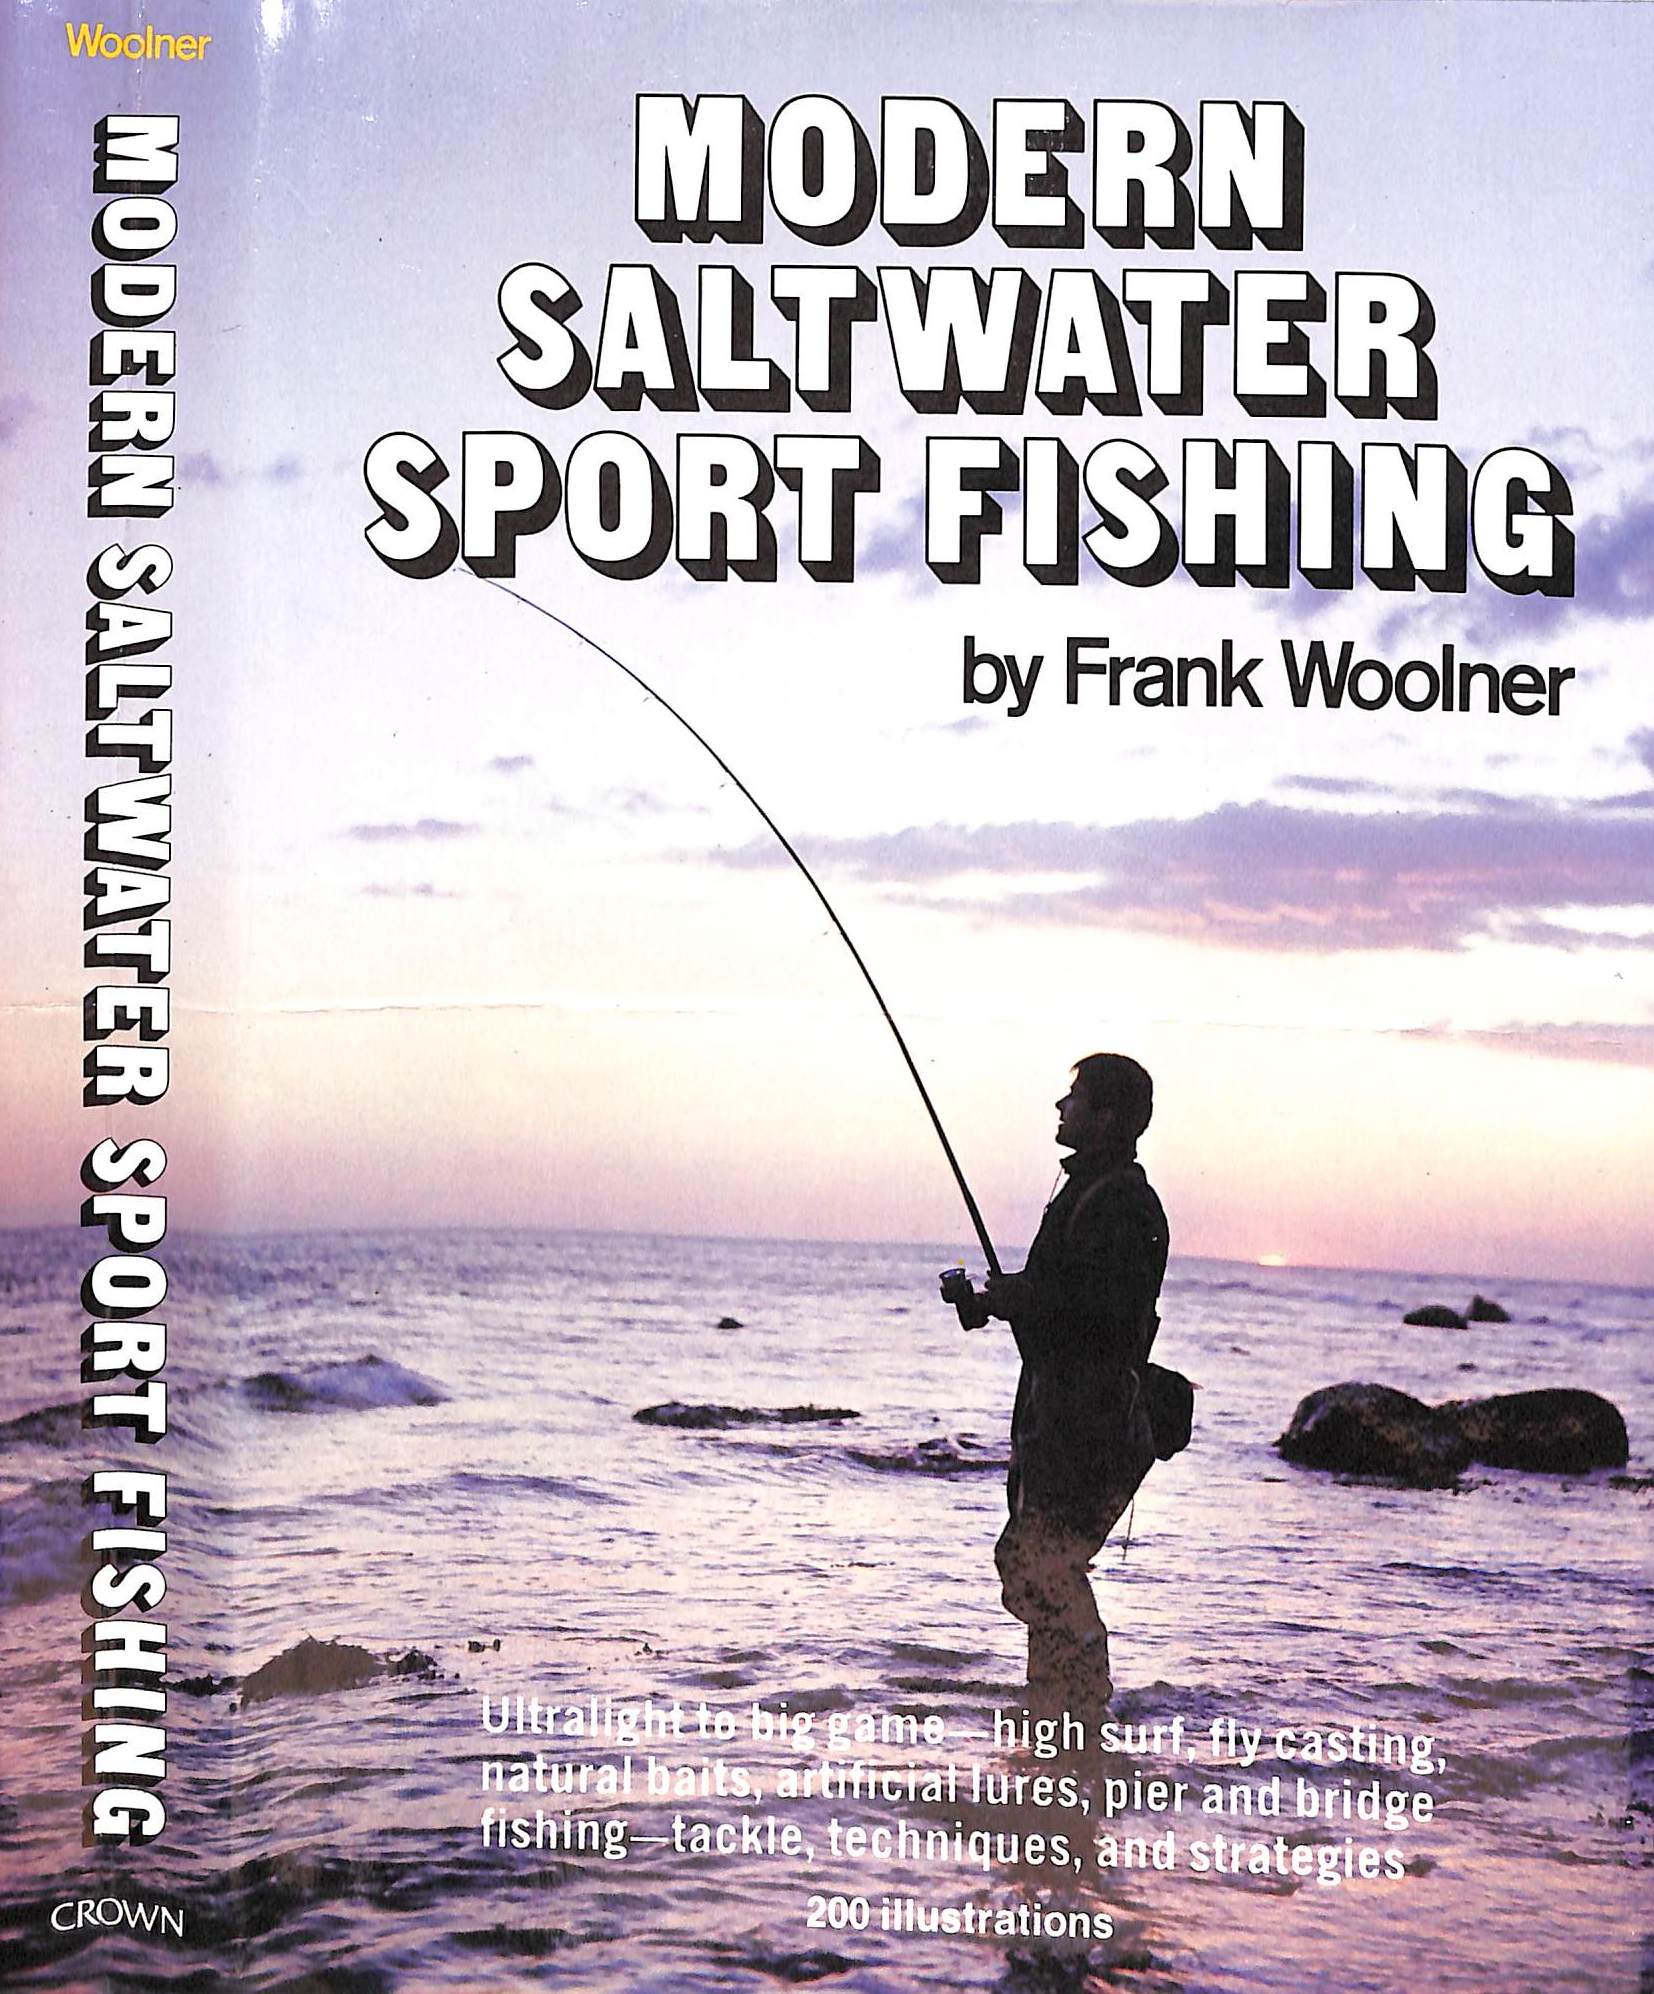 Modern Saltwater Sport Fishing 1972 WOOLNER, Frank Woolner